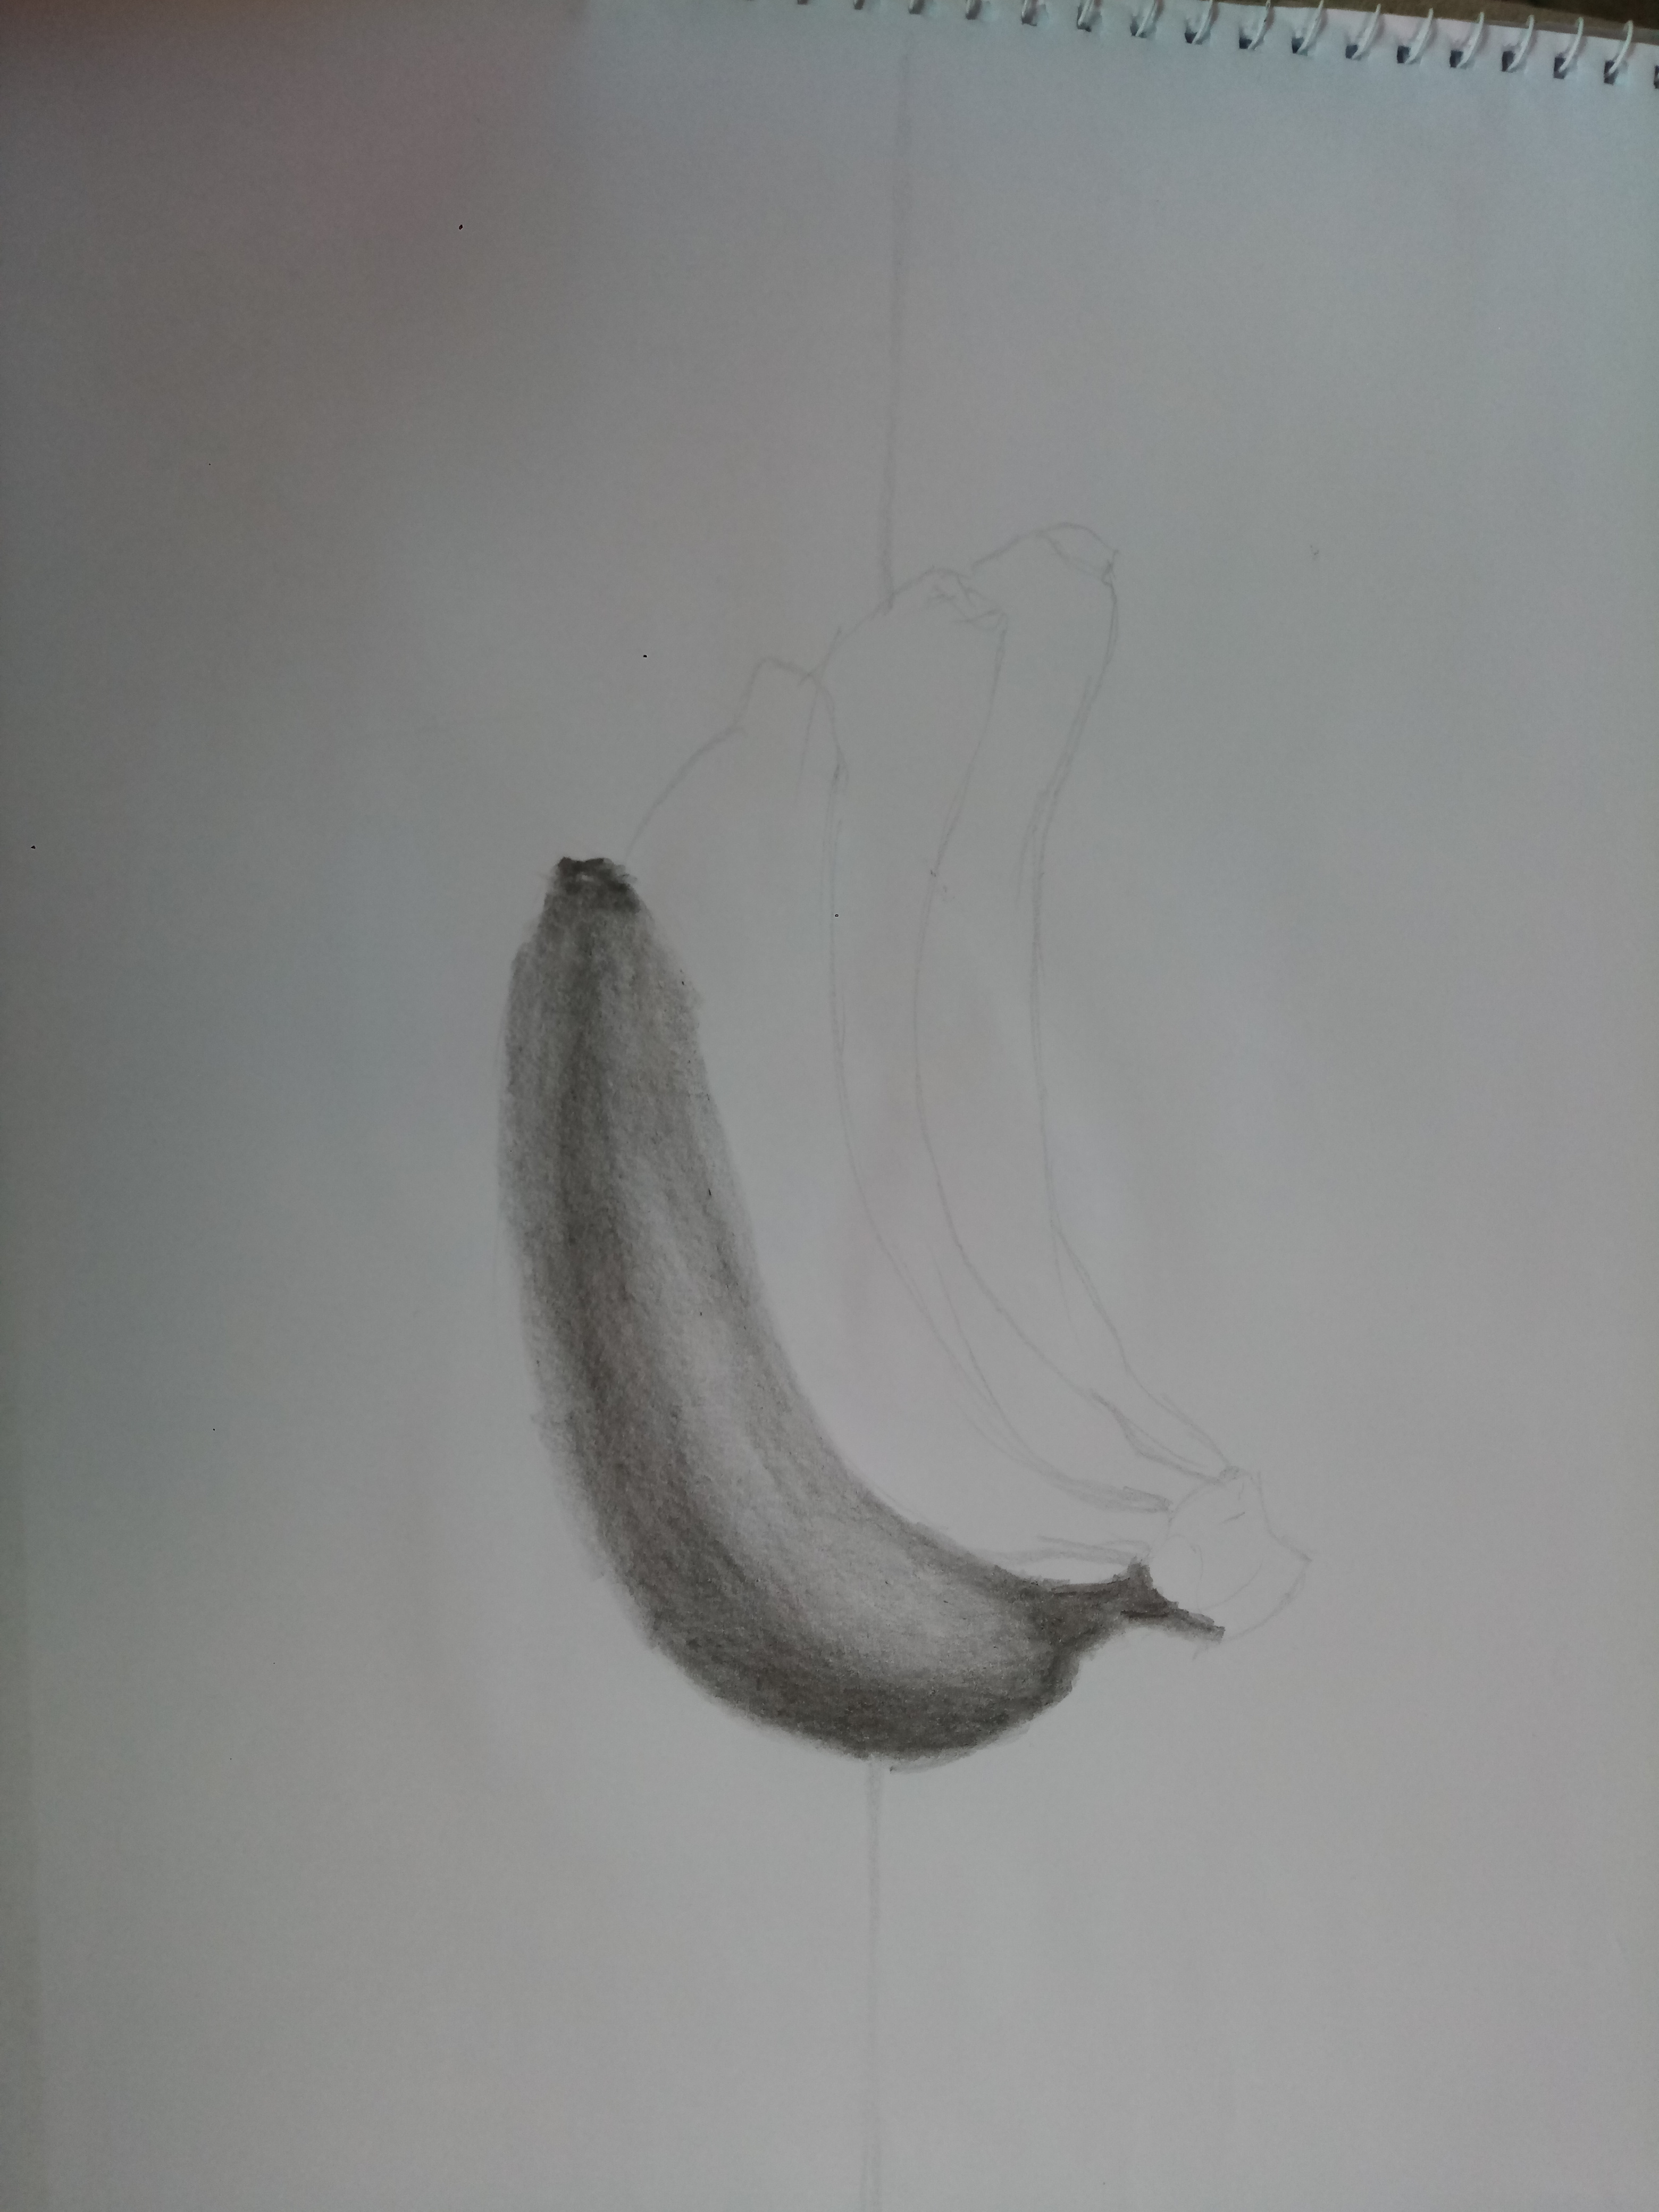 Imagem relacionada | Banana sketch, Drawing sketches, Fruit sketch